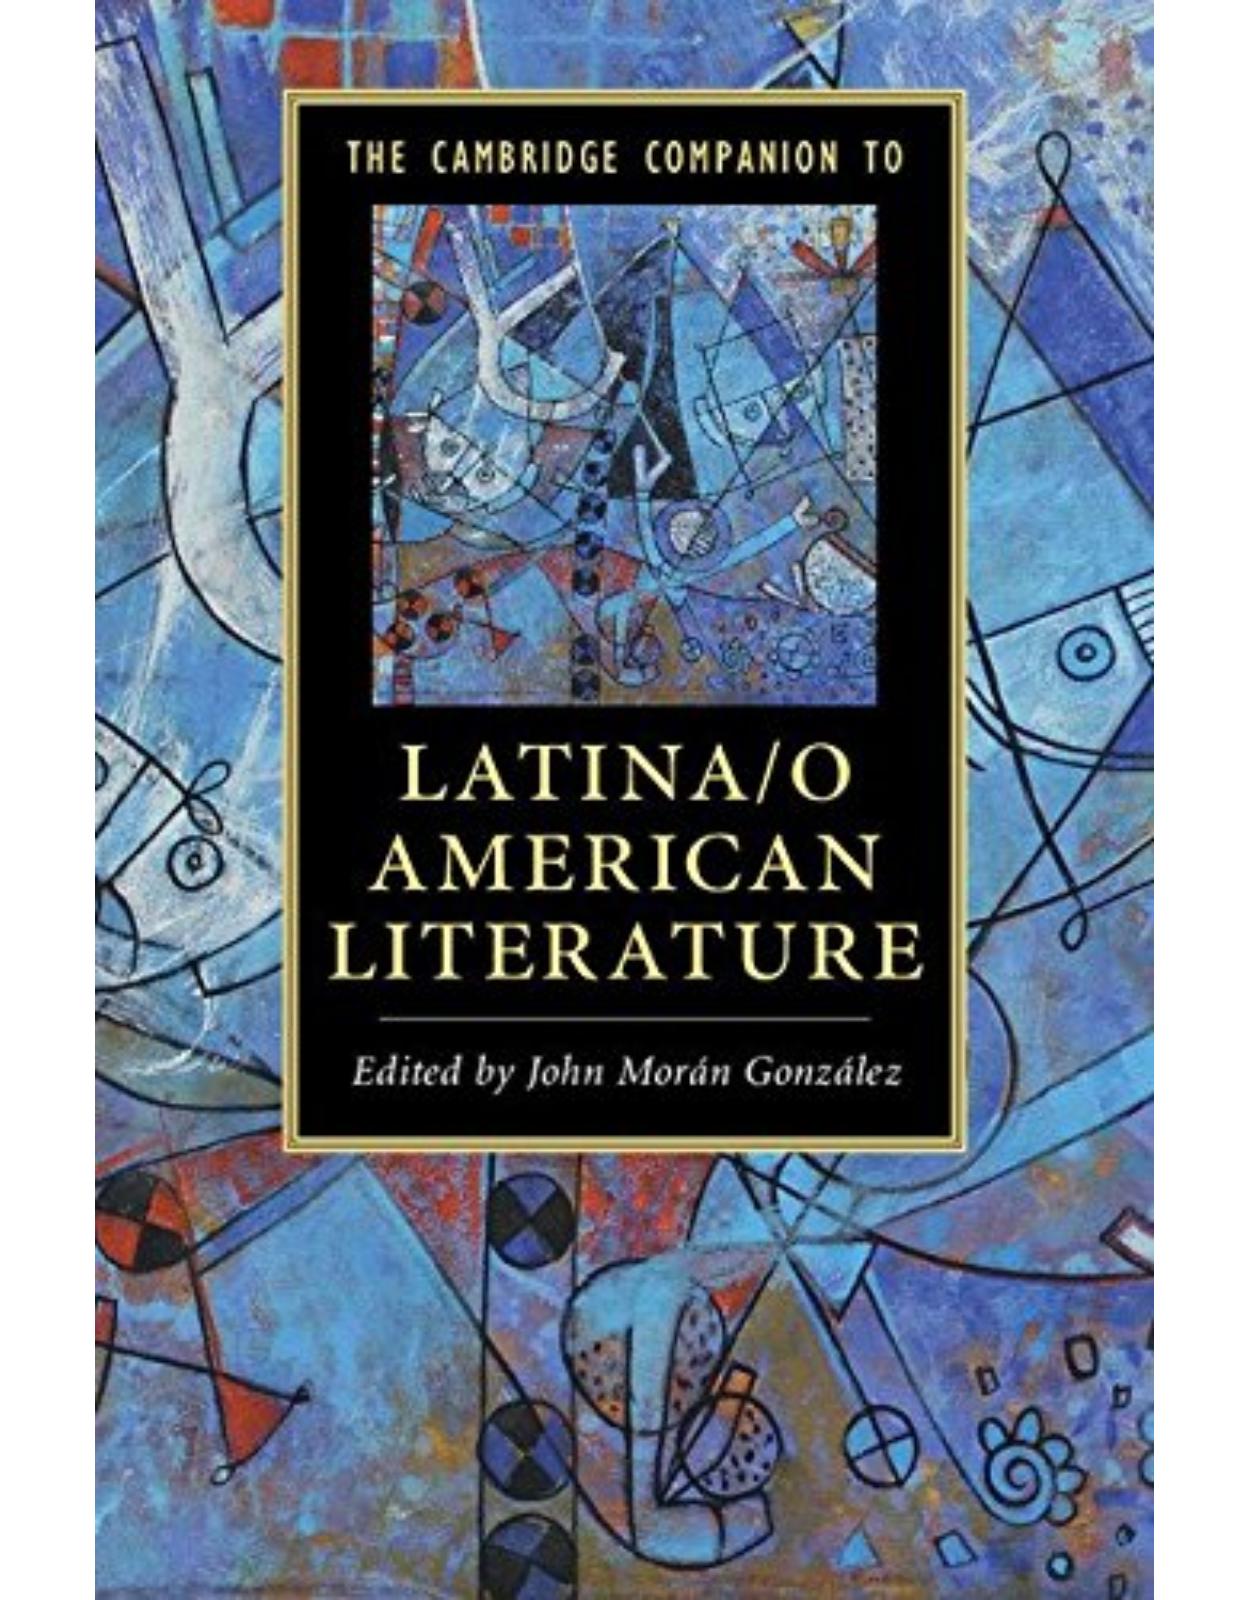 The Cambridge Companion to Latina/o American Literature (Cambridge Companions to Literature)